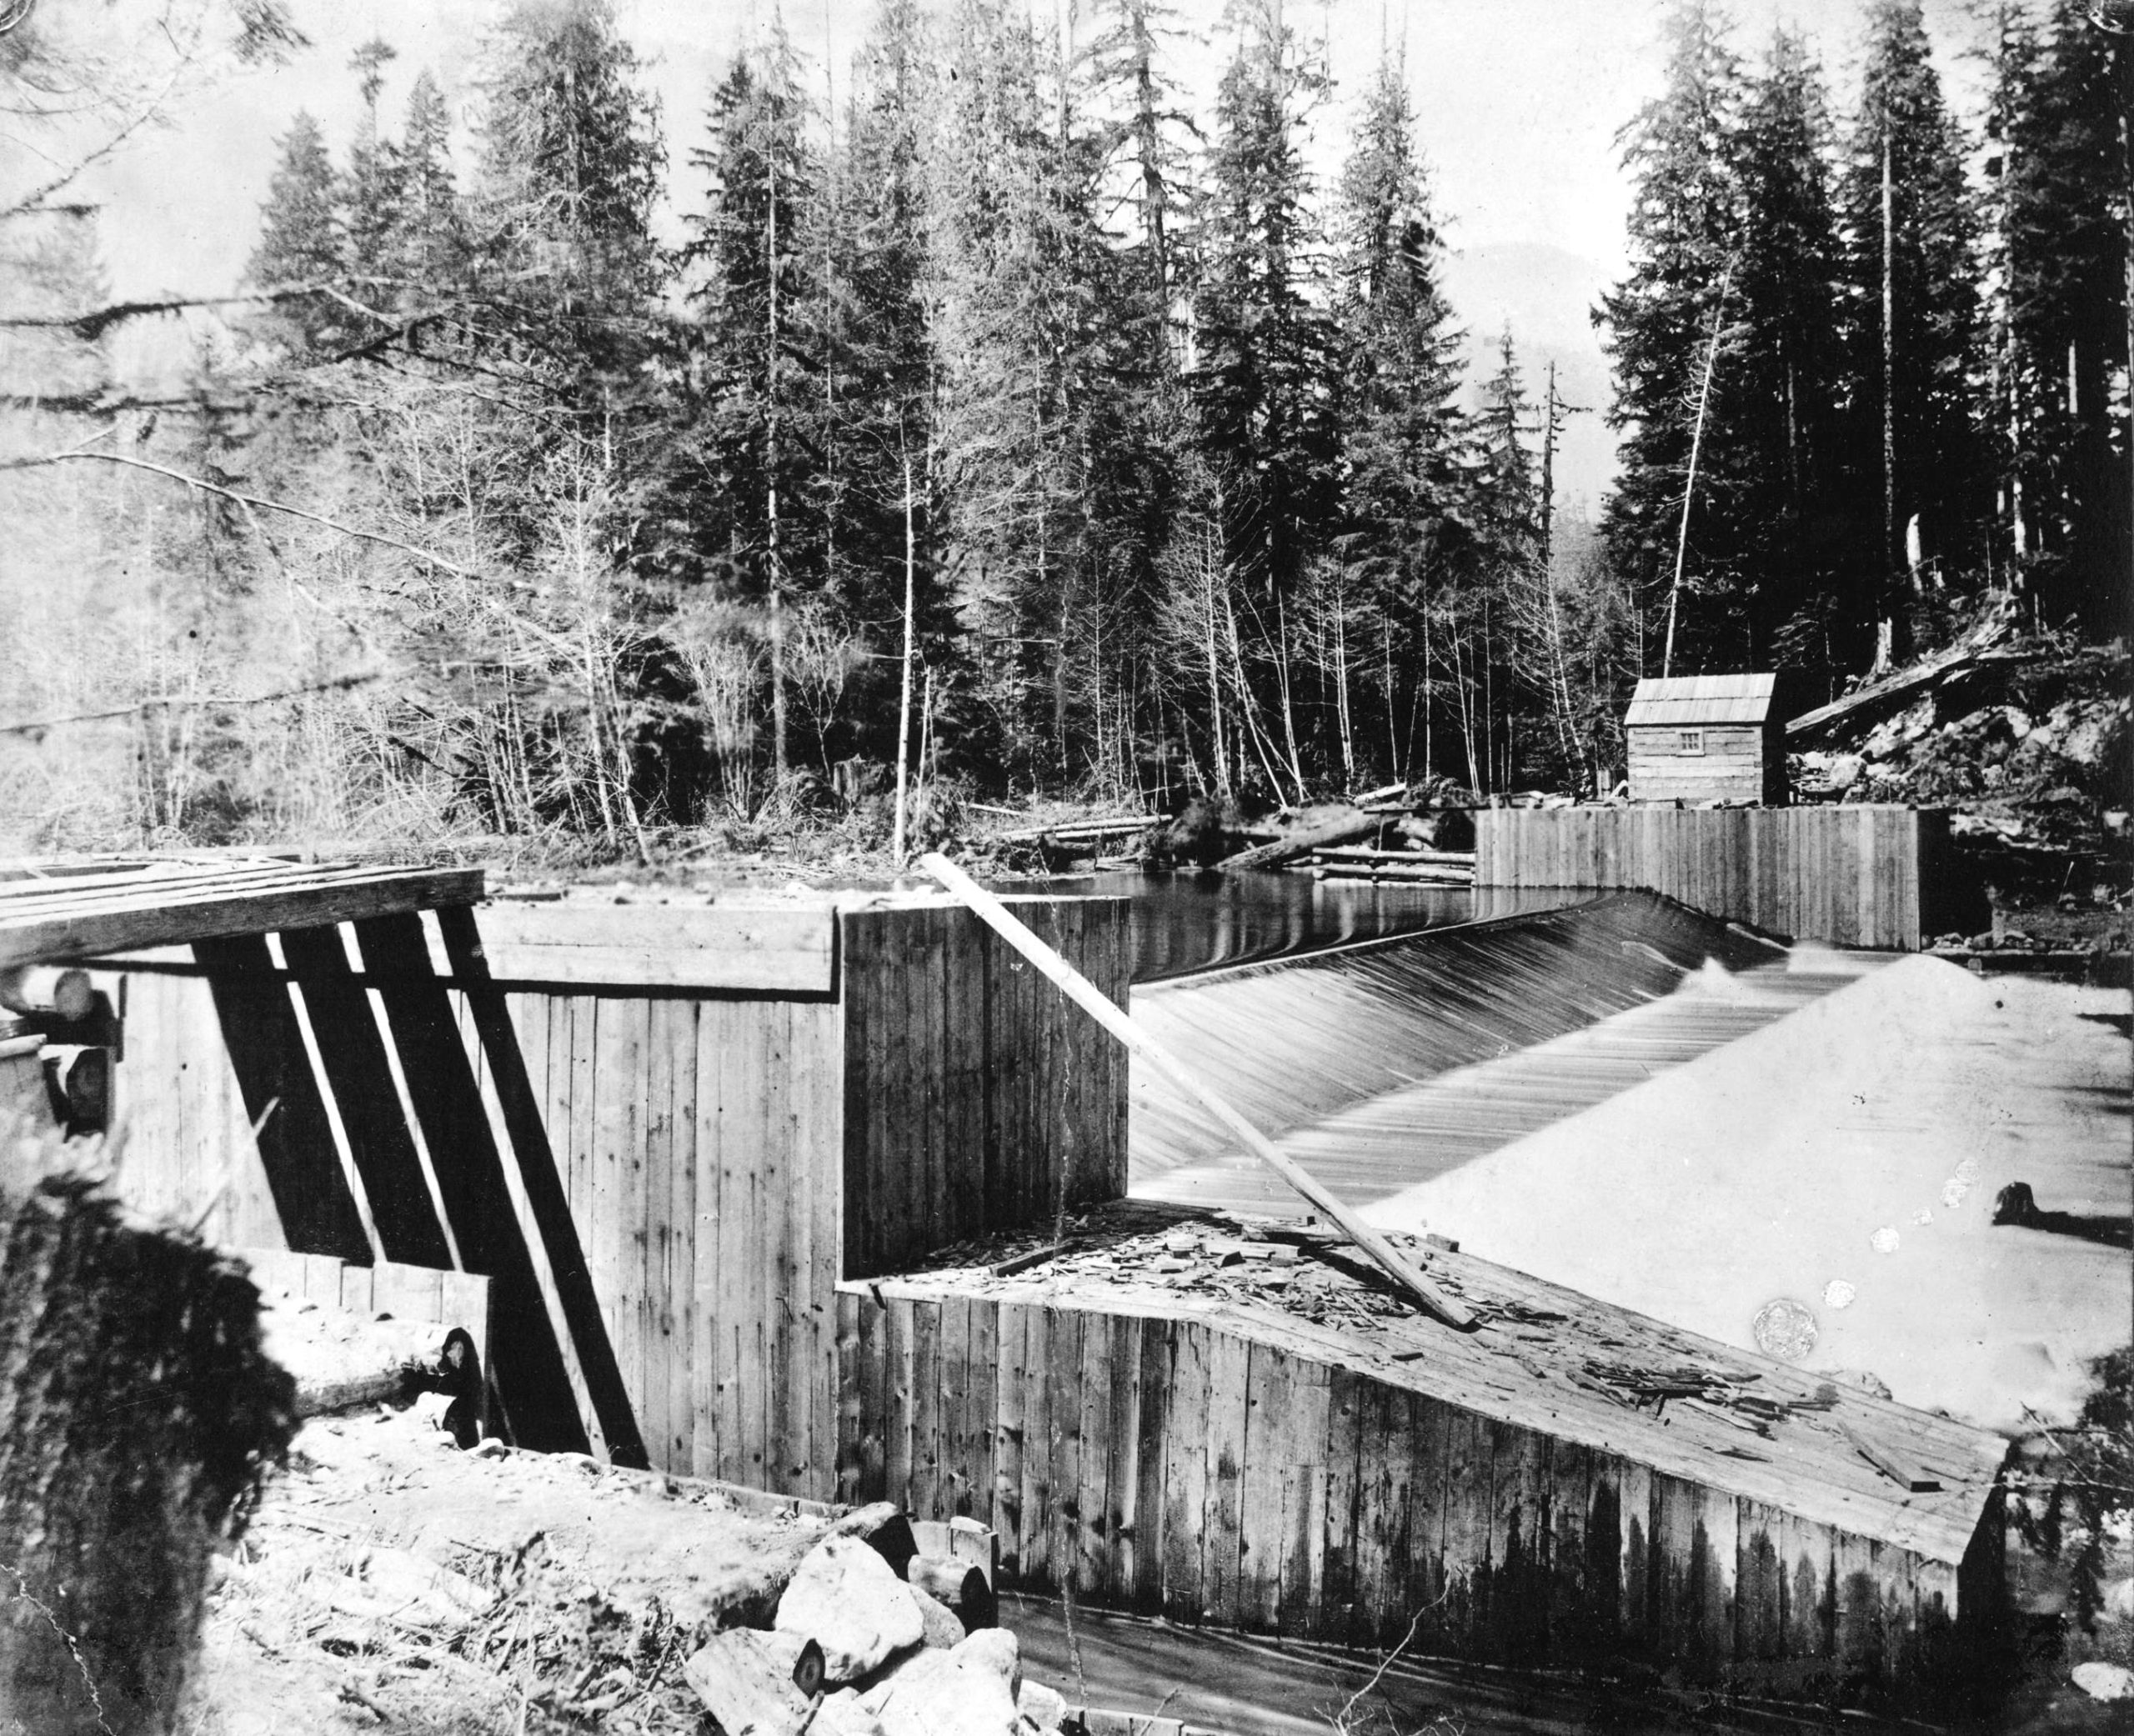 Militia Department Allows Reservoir in Stanley Park – November 27, 1893